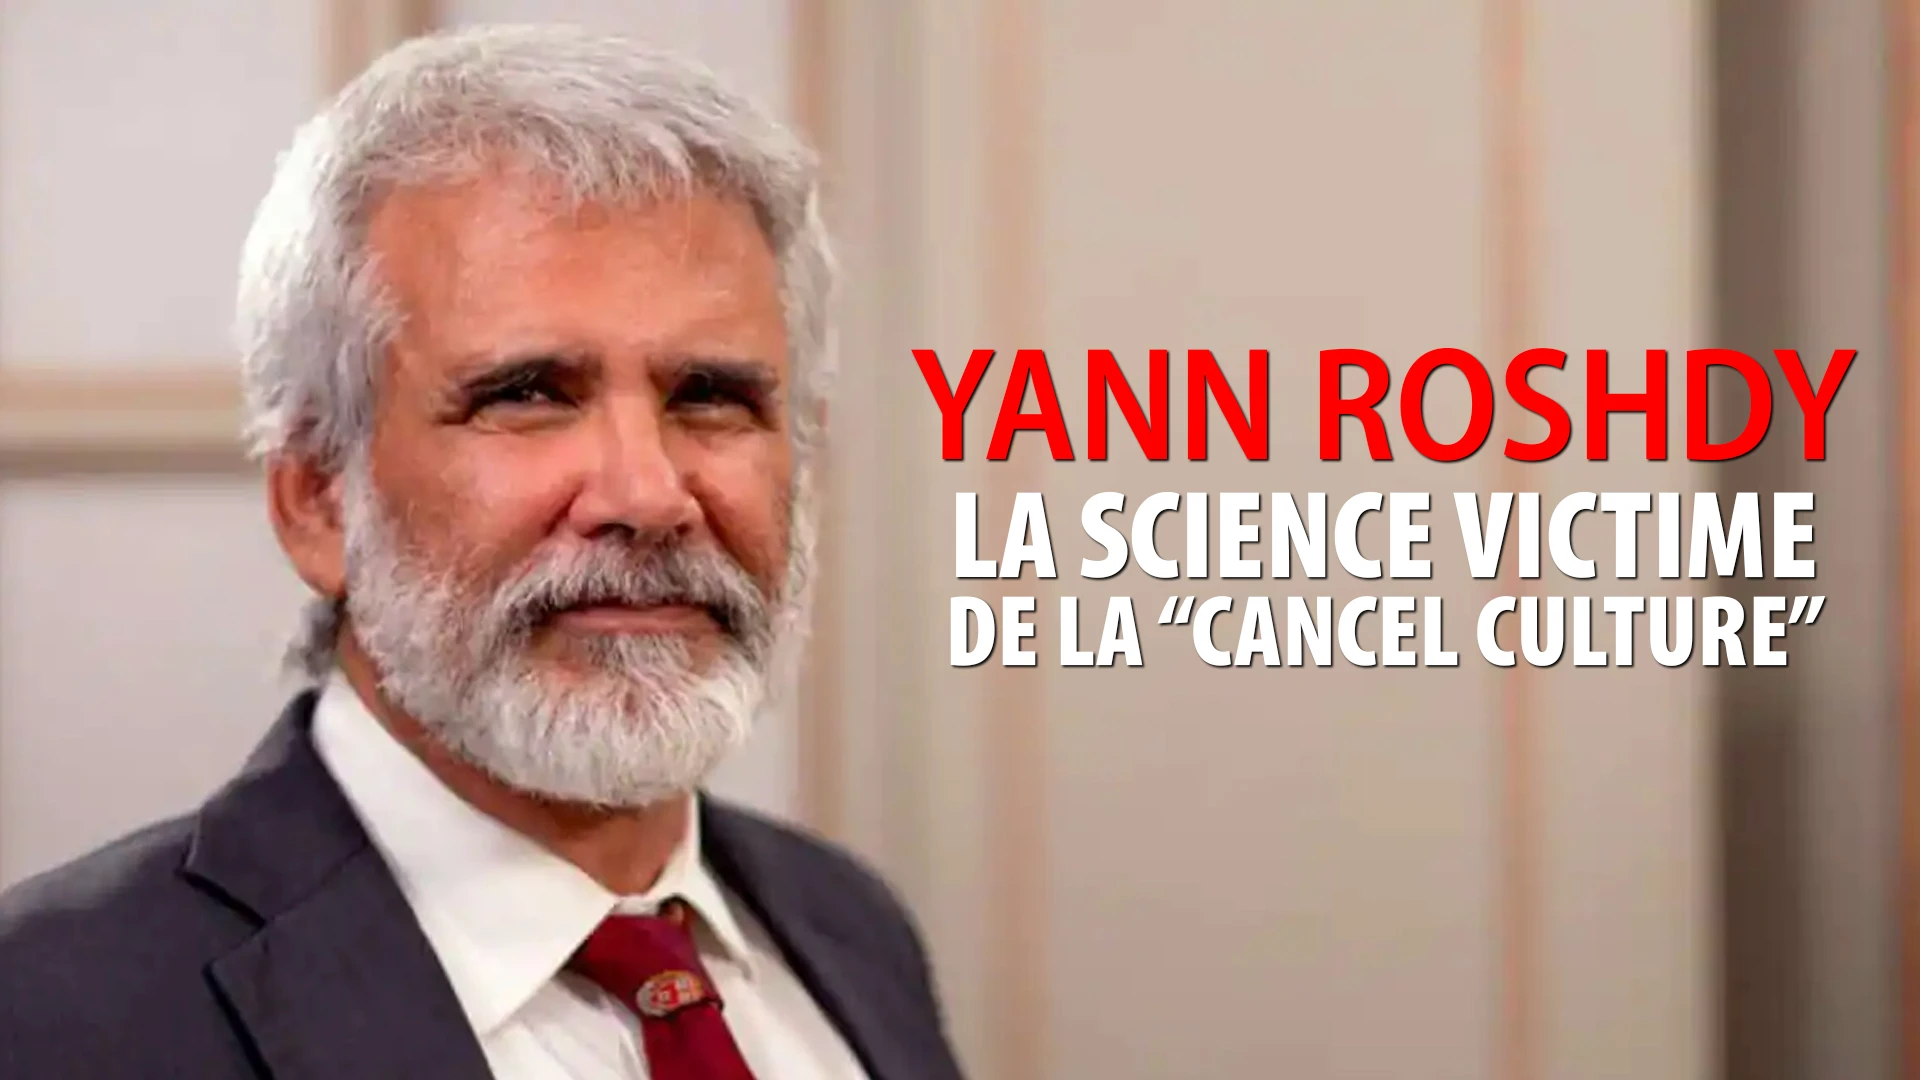 YANN ROSHDY – LA SCIENCE VICTIME DE LA « CANCEL CULTURE »